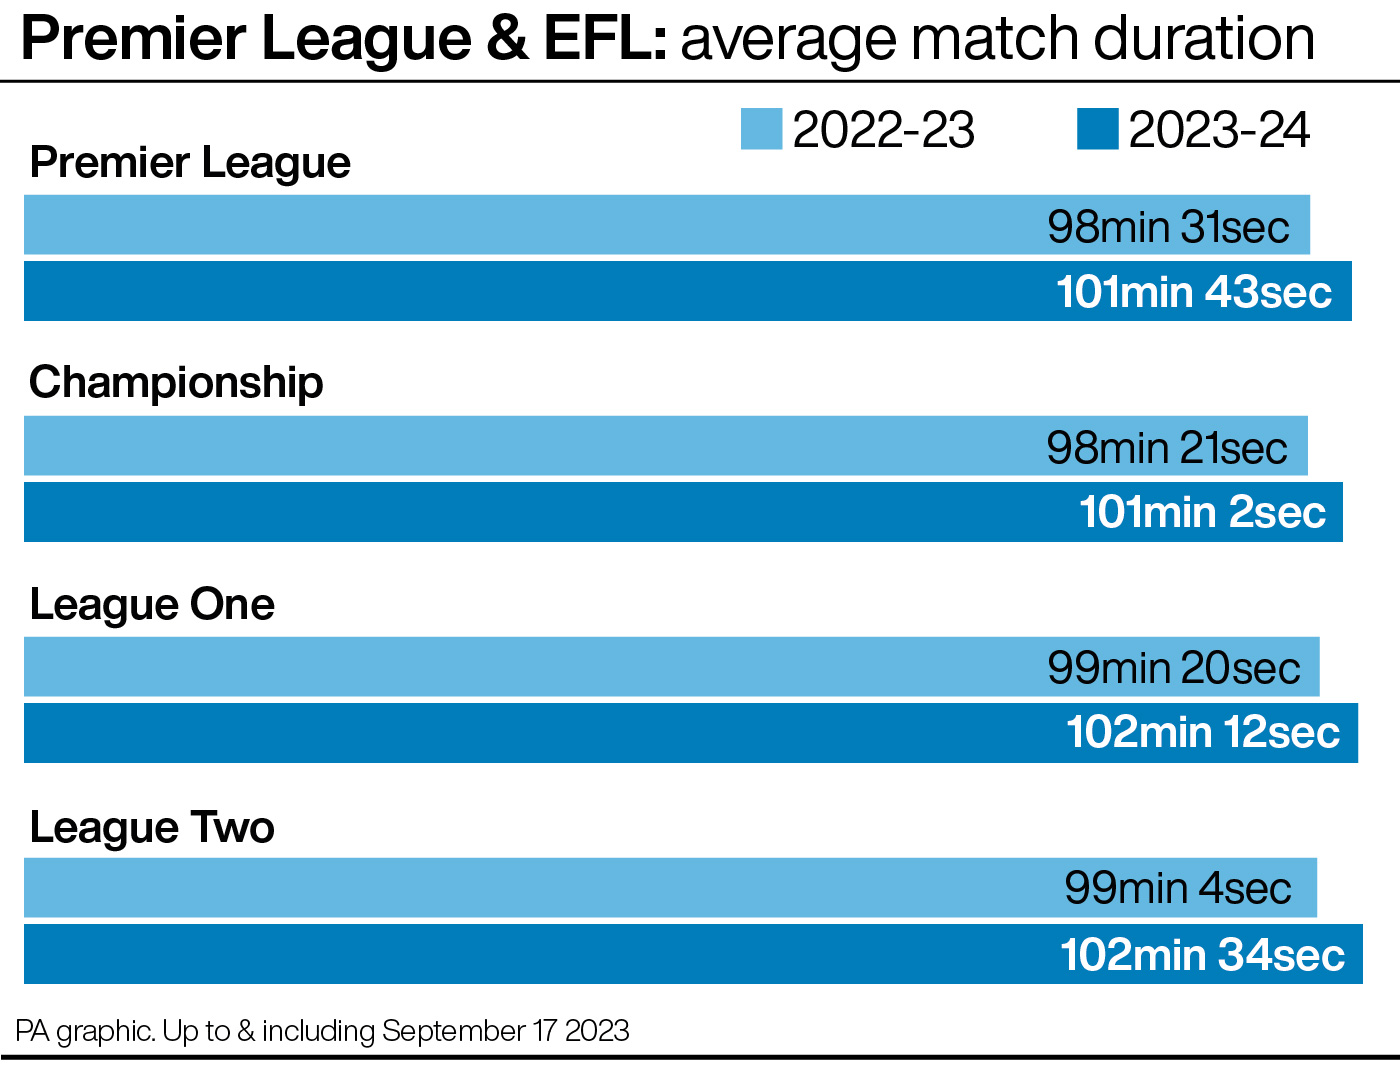 Premier League and EFL: average match duration, 2022-23 v 2023-24